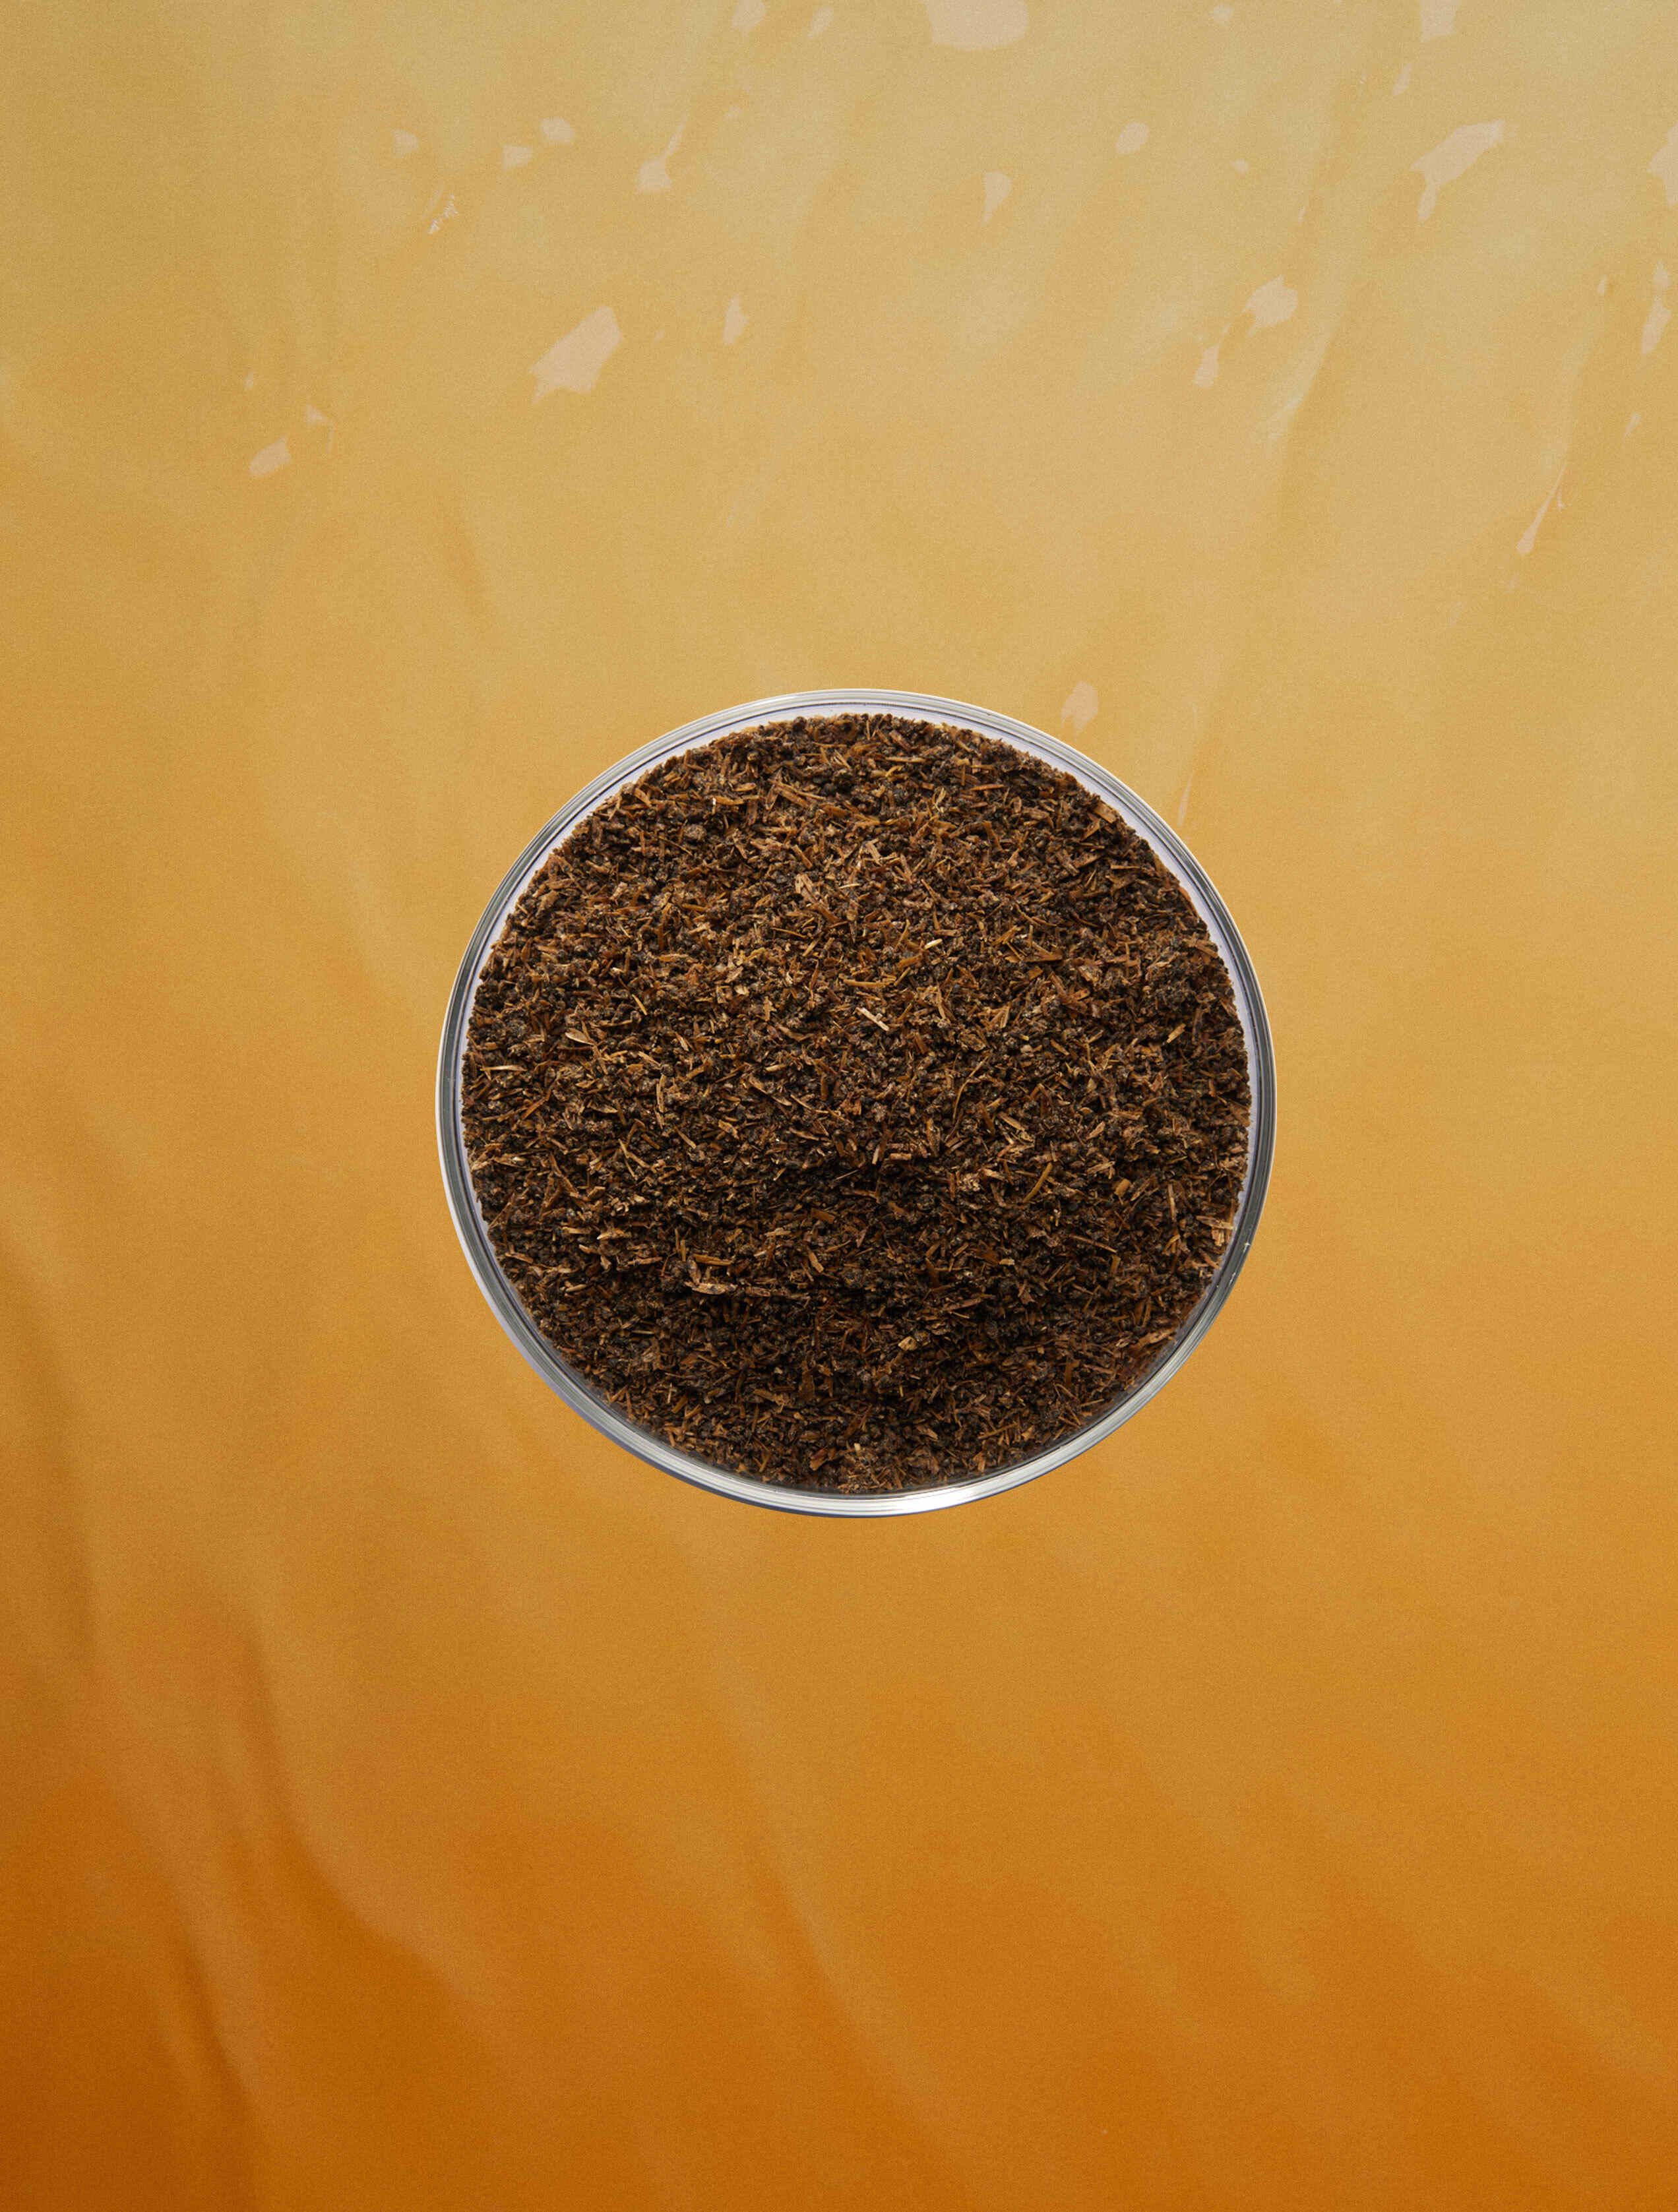 Fertilizer in a petri dish on an orange background